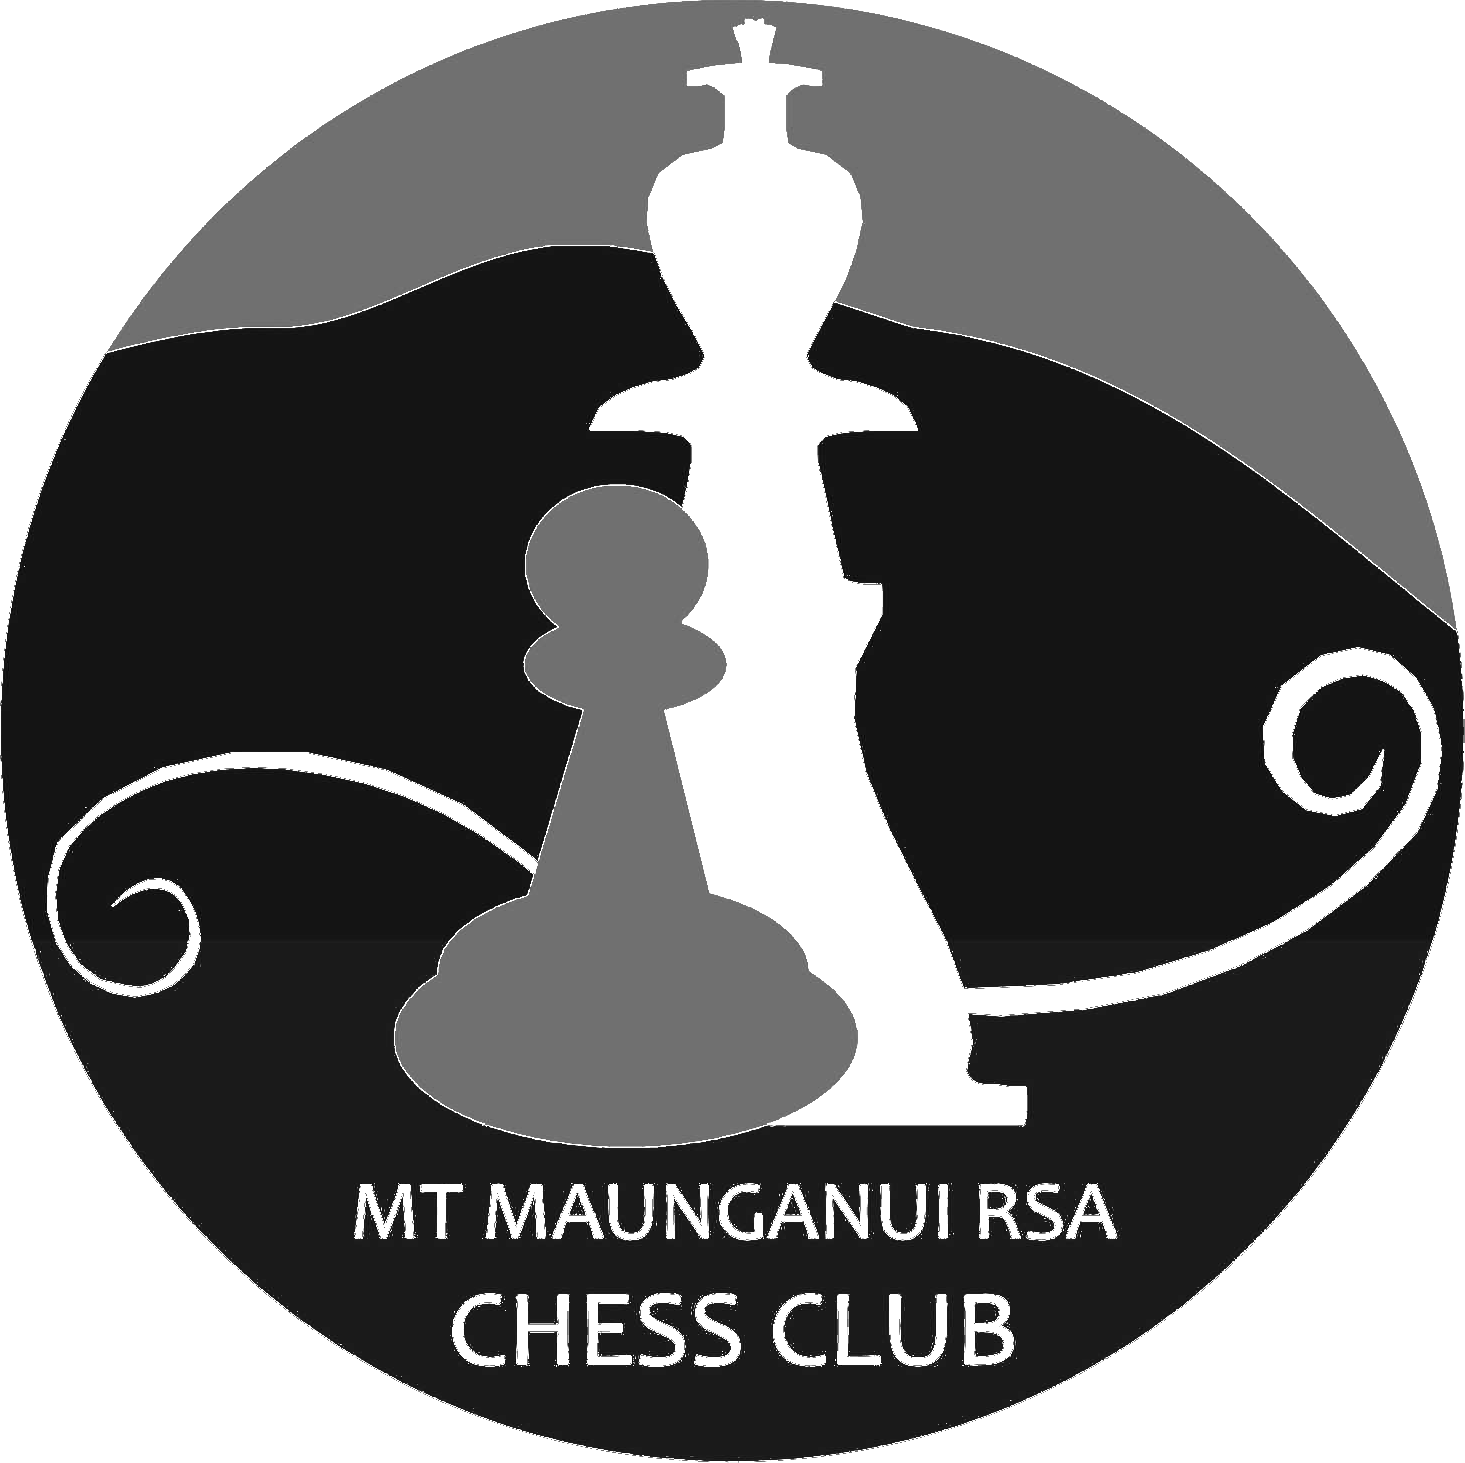 Mount Maunganui RSA Chess Club